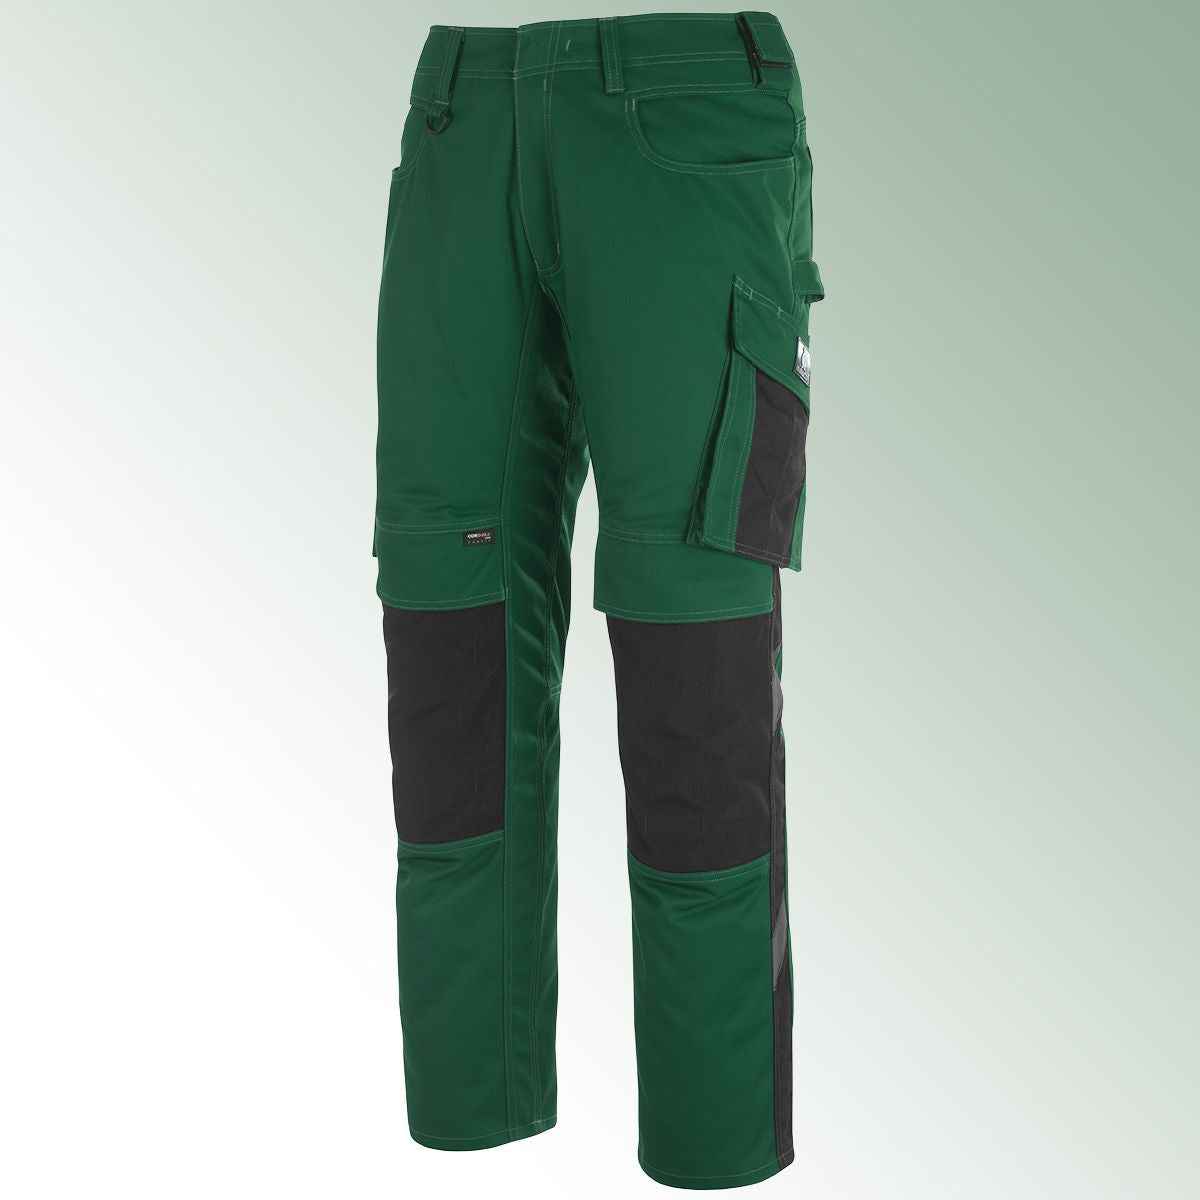 Trousers Mannheim Size 54 Green / Black